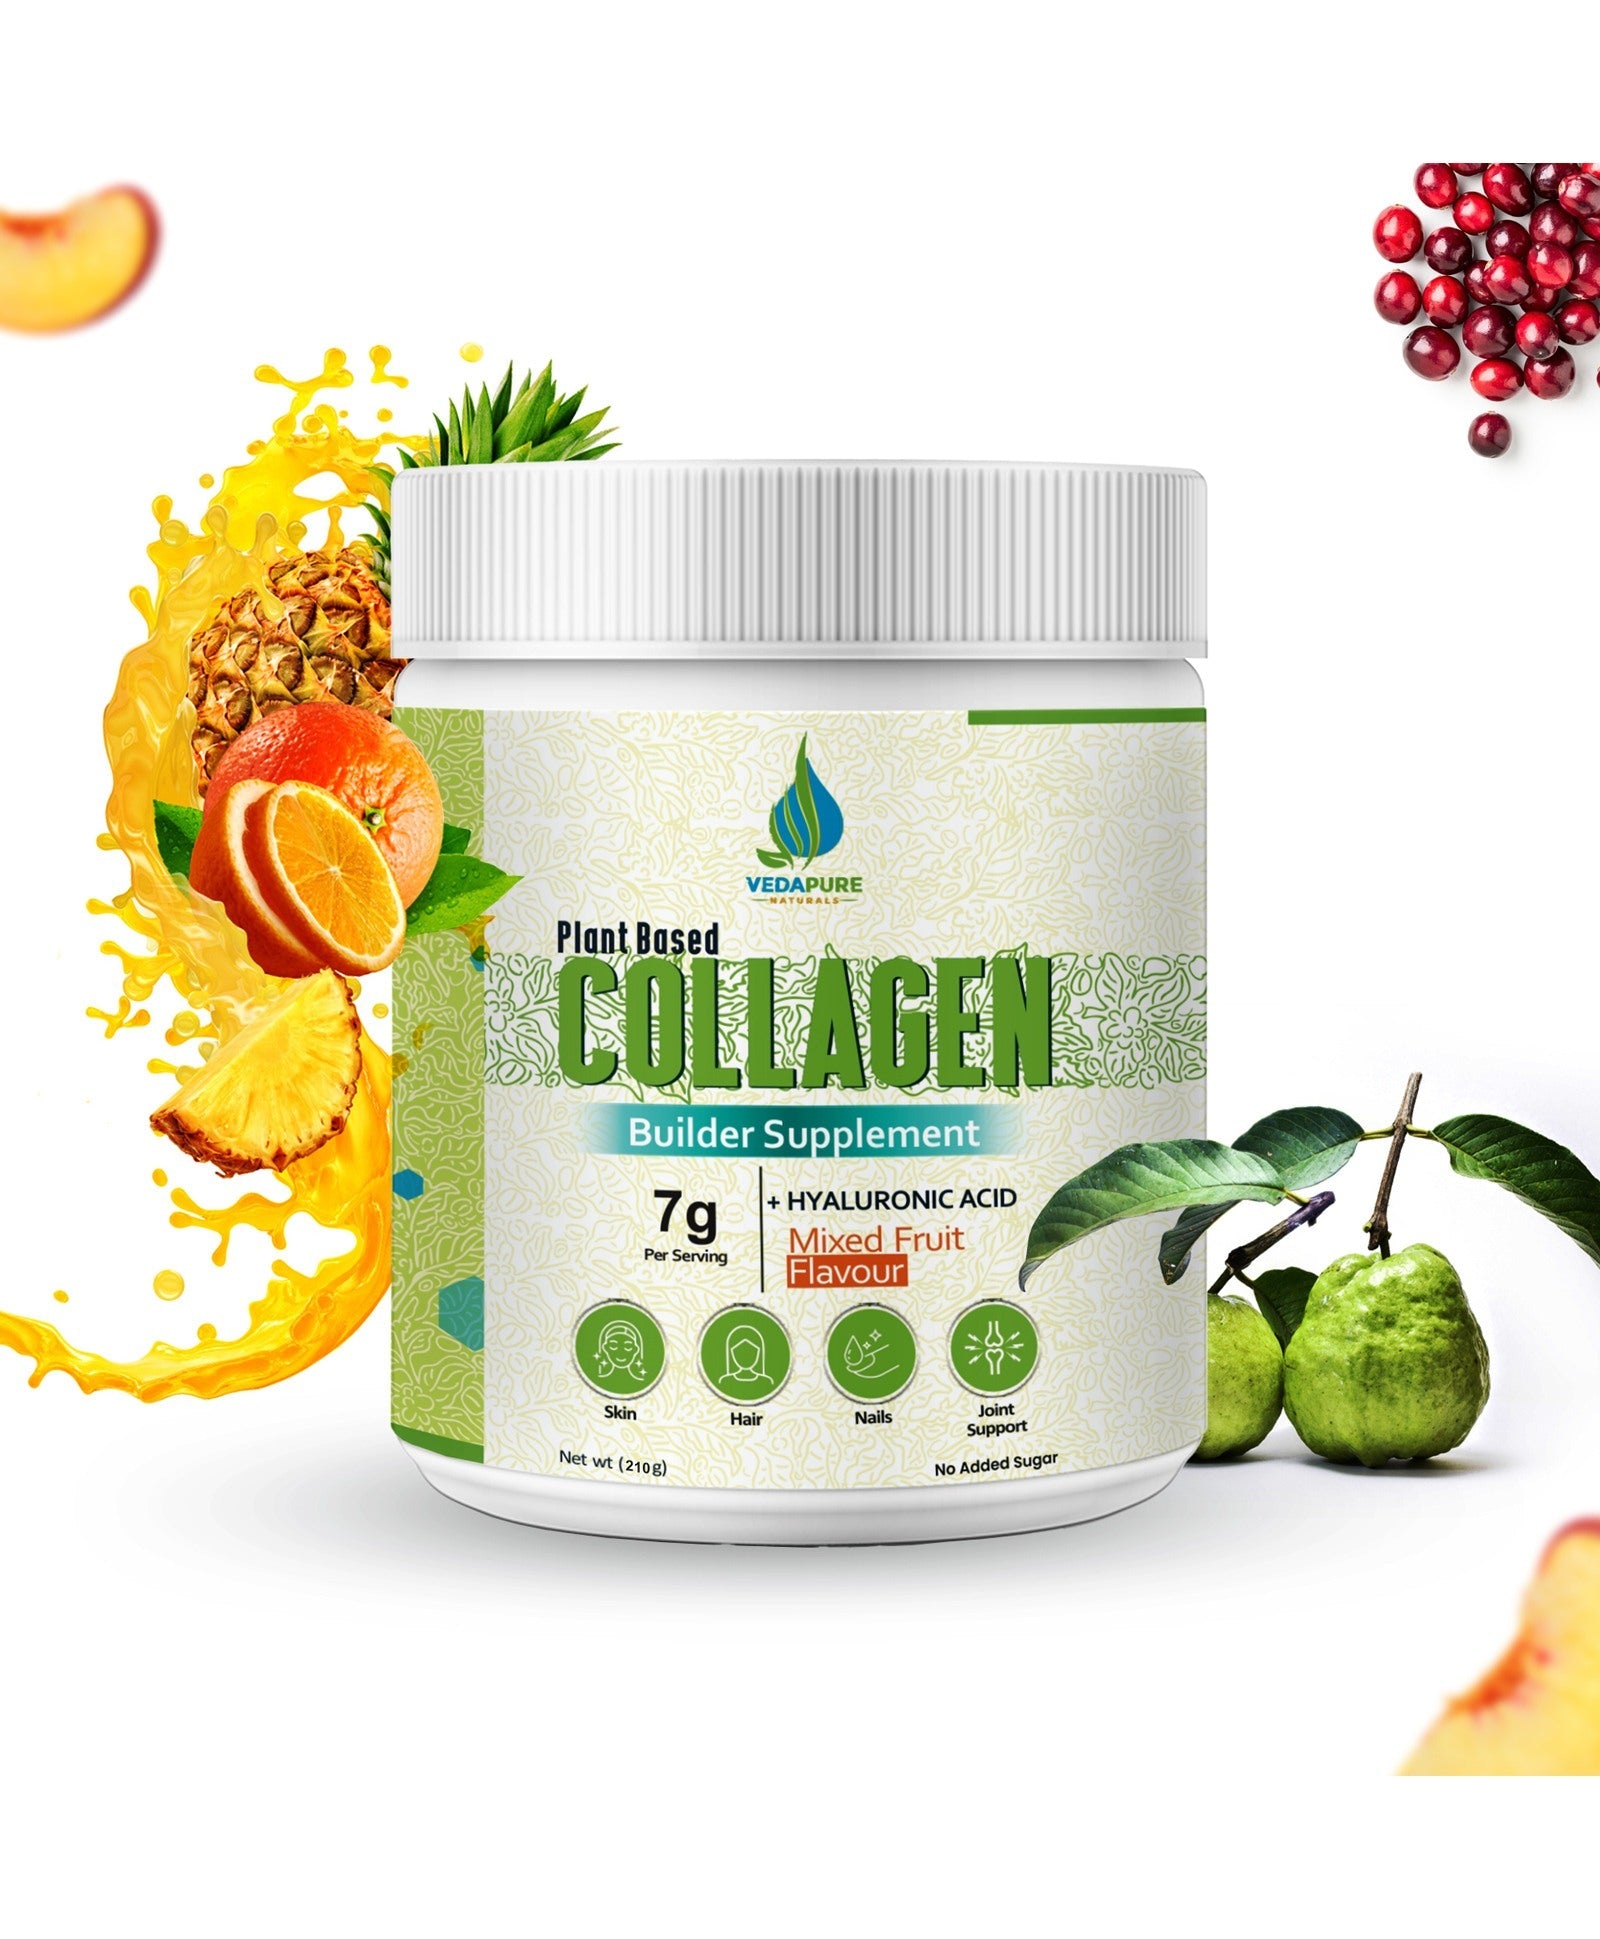 Vedapure Plant Based Skin Collagen Builder Supplement, Mixed Fruit 210g